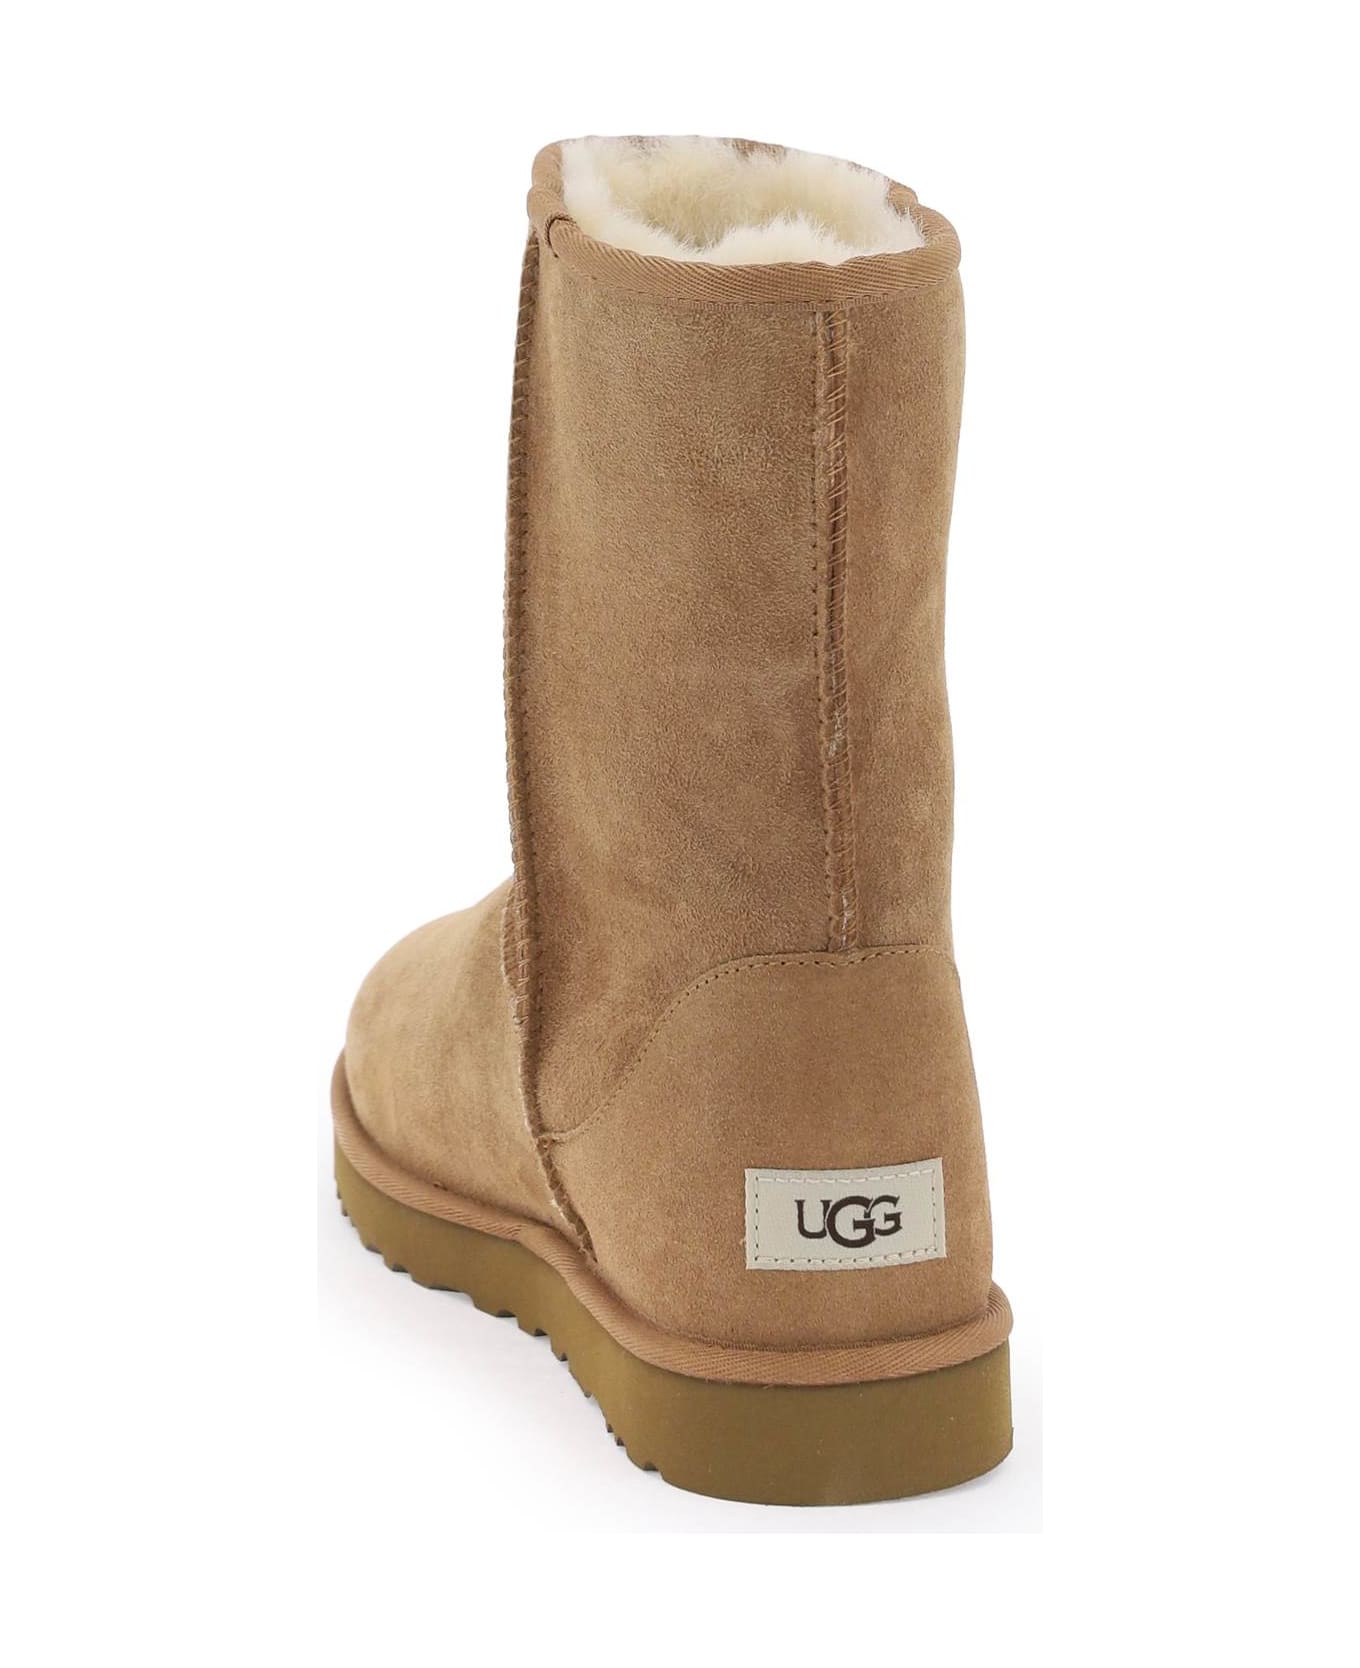 UGG Classic Short Boots - CHESTNUT (Beige)